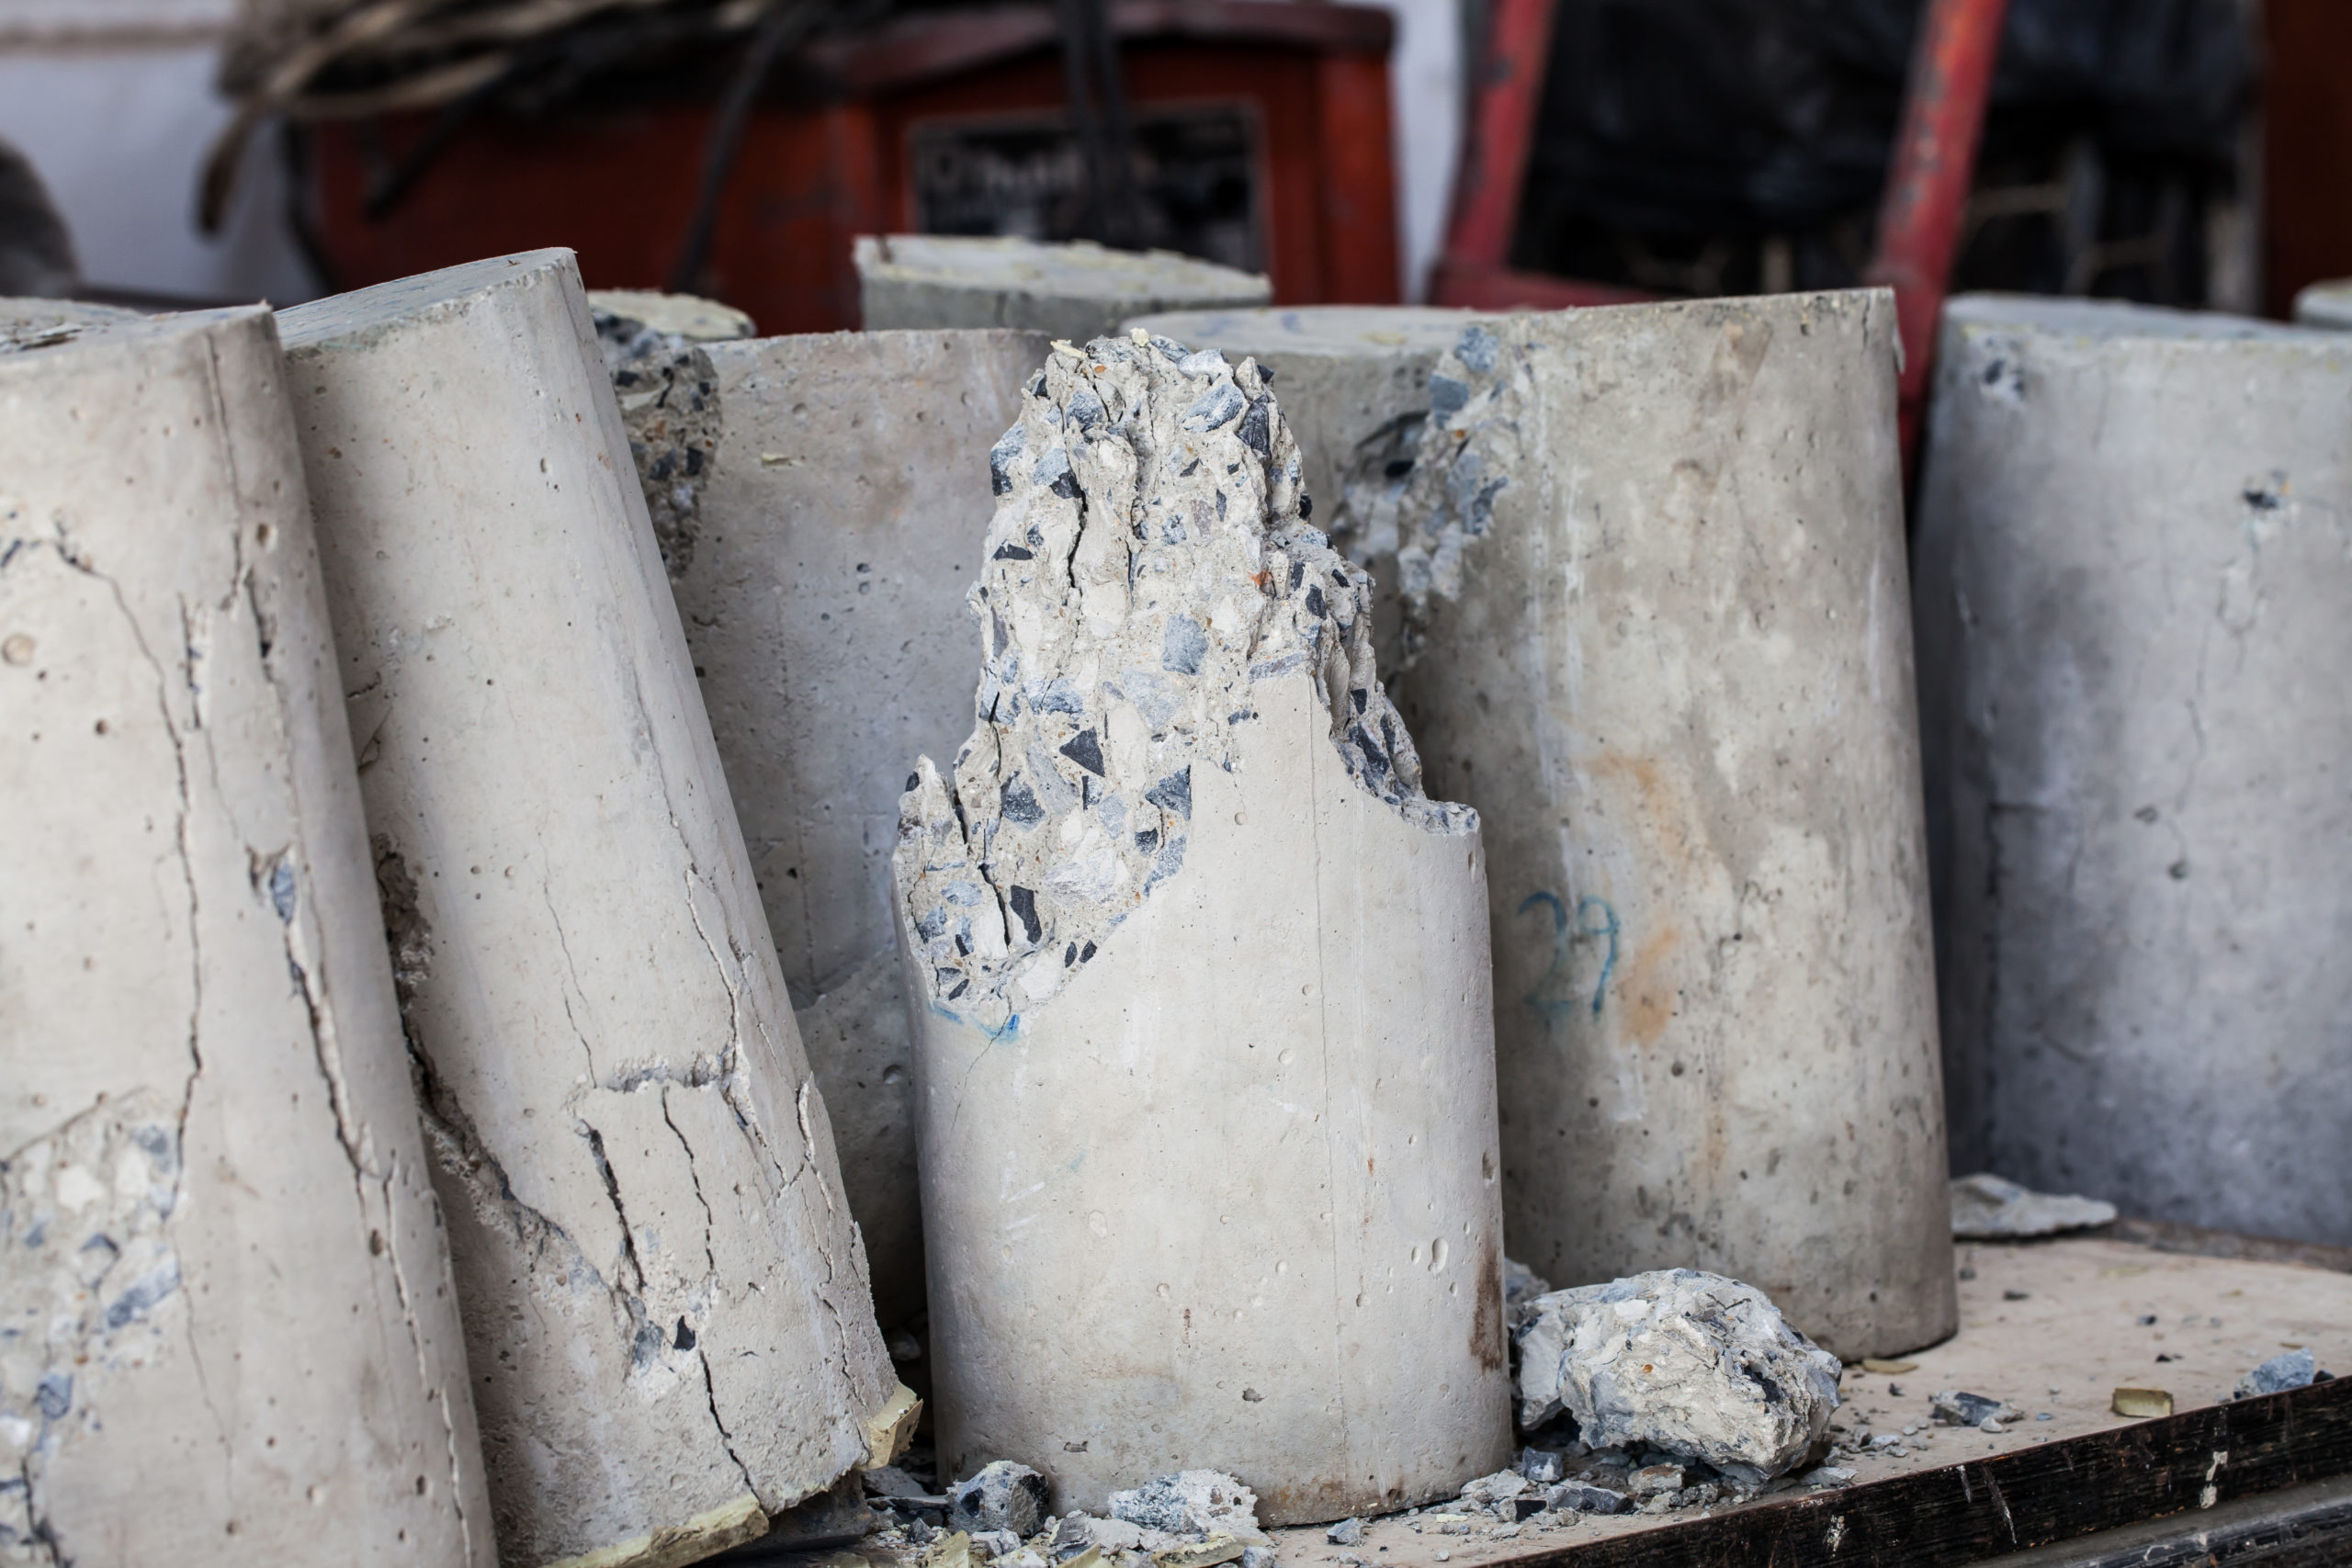 A cluster of concrete cylinder samples rest together after being cracked from compression testing.